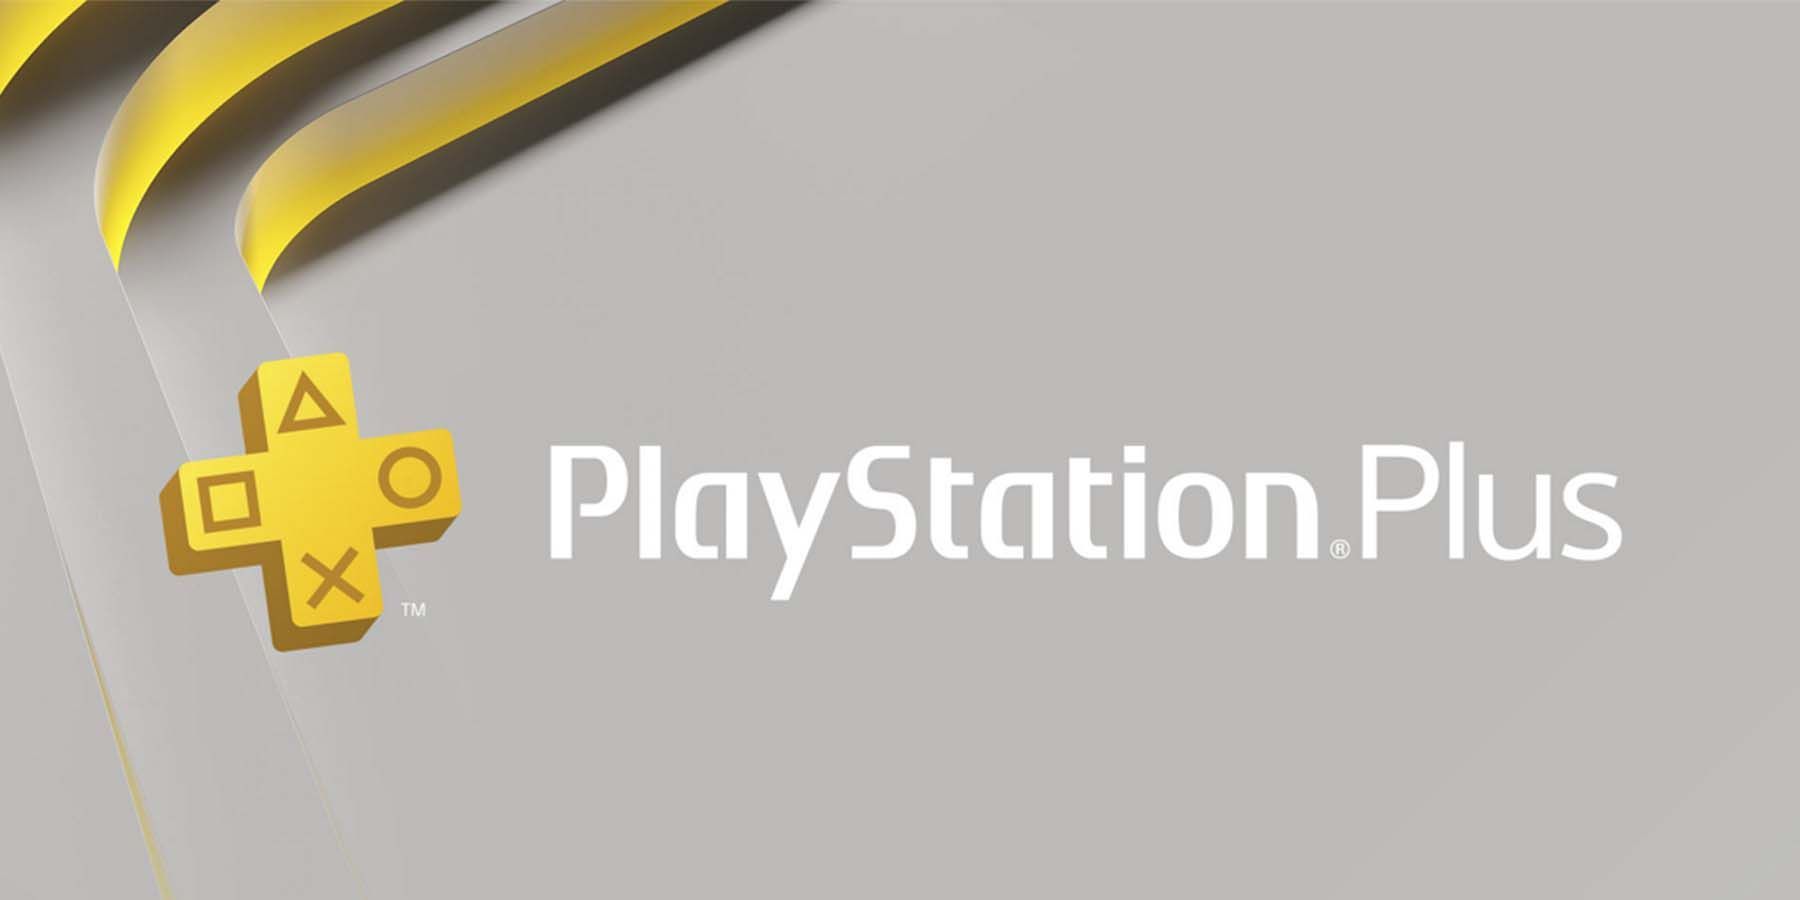 PlayStation Plus Game Catalog lineup for November: Skyrim, Rainbow Six  Siege, Kingdom Hearts III and more – PlayStation.Blog